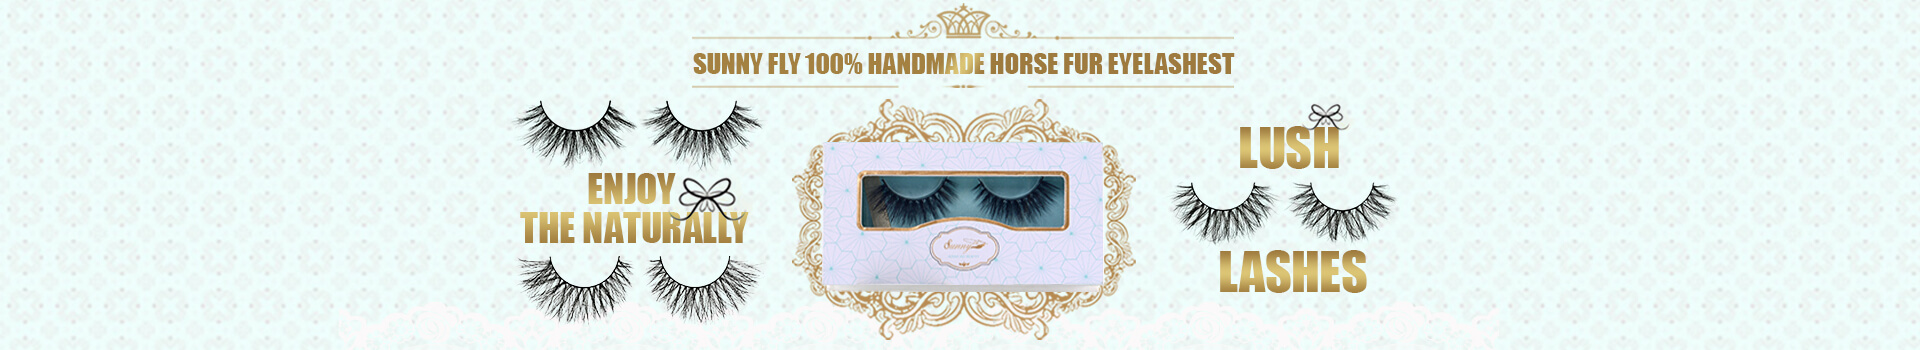 Real Horse Fur Eyesashes HF36